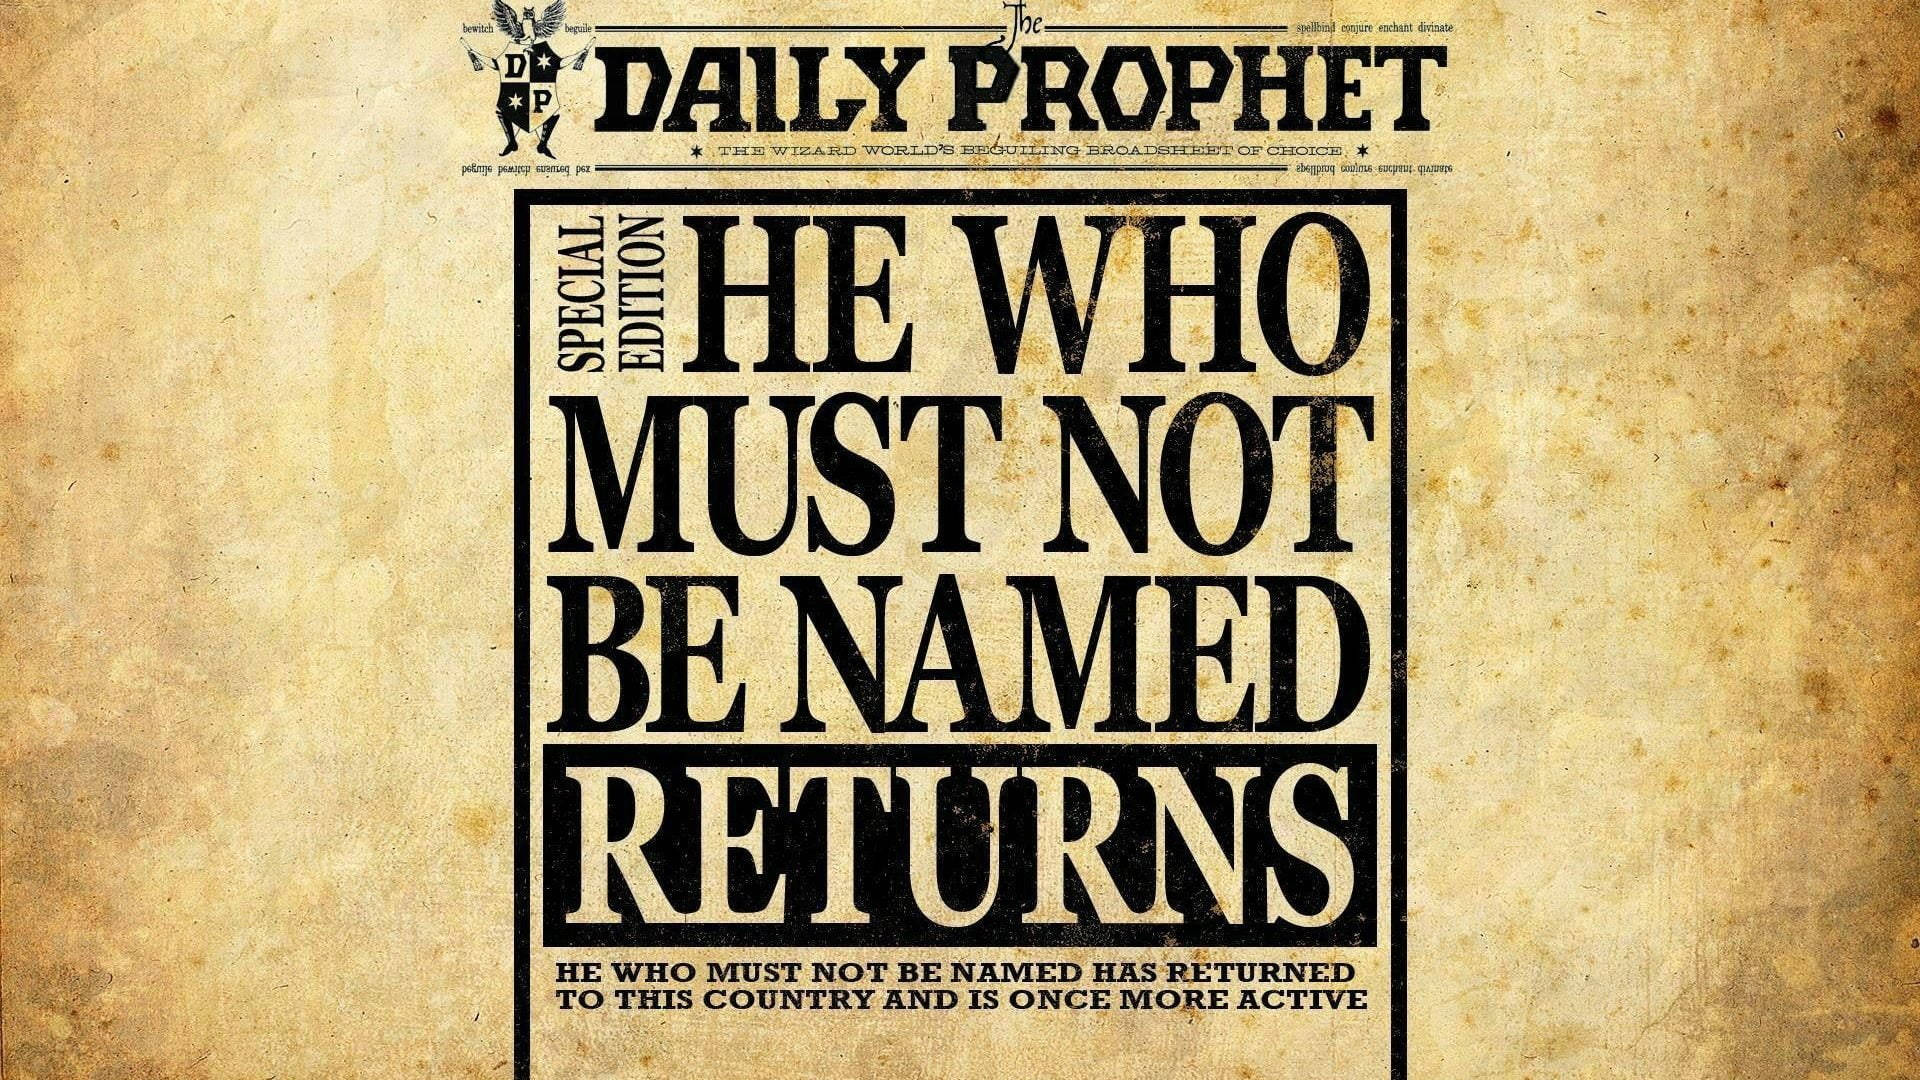 Cool Harry Potter Daily Prophet Headline Wallpaper